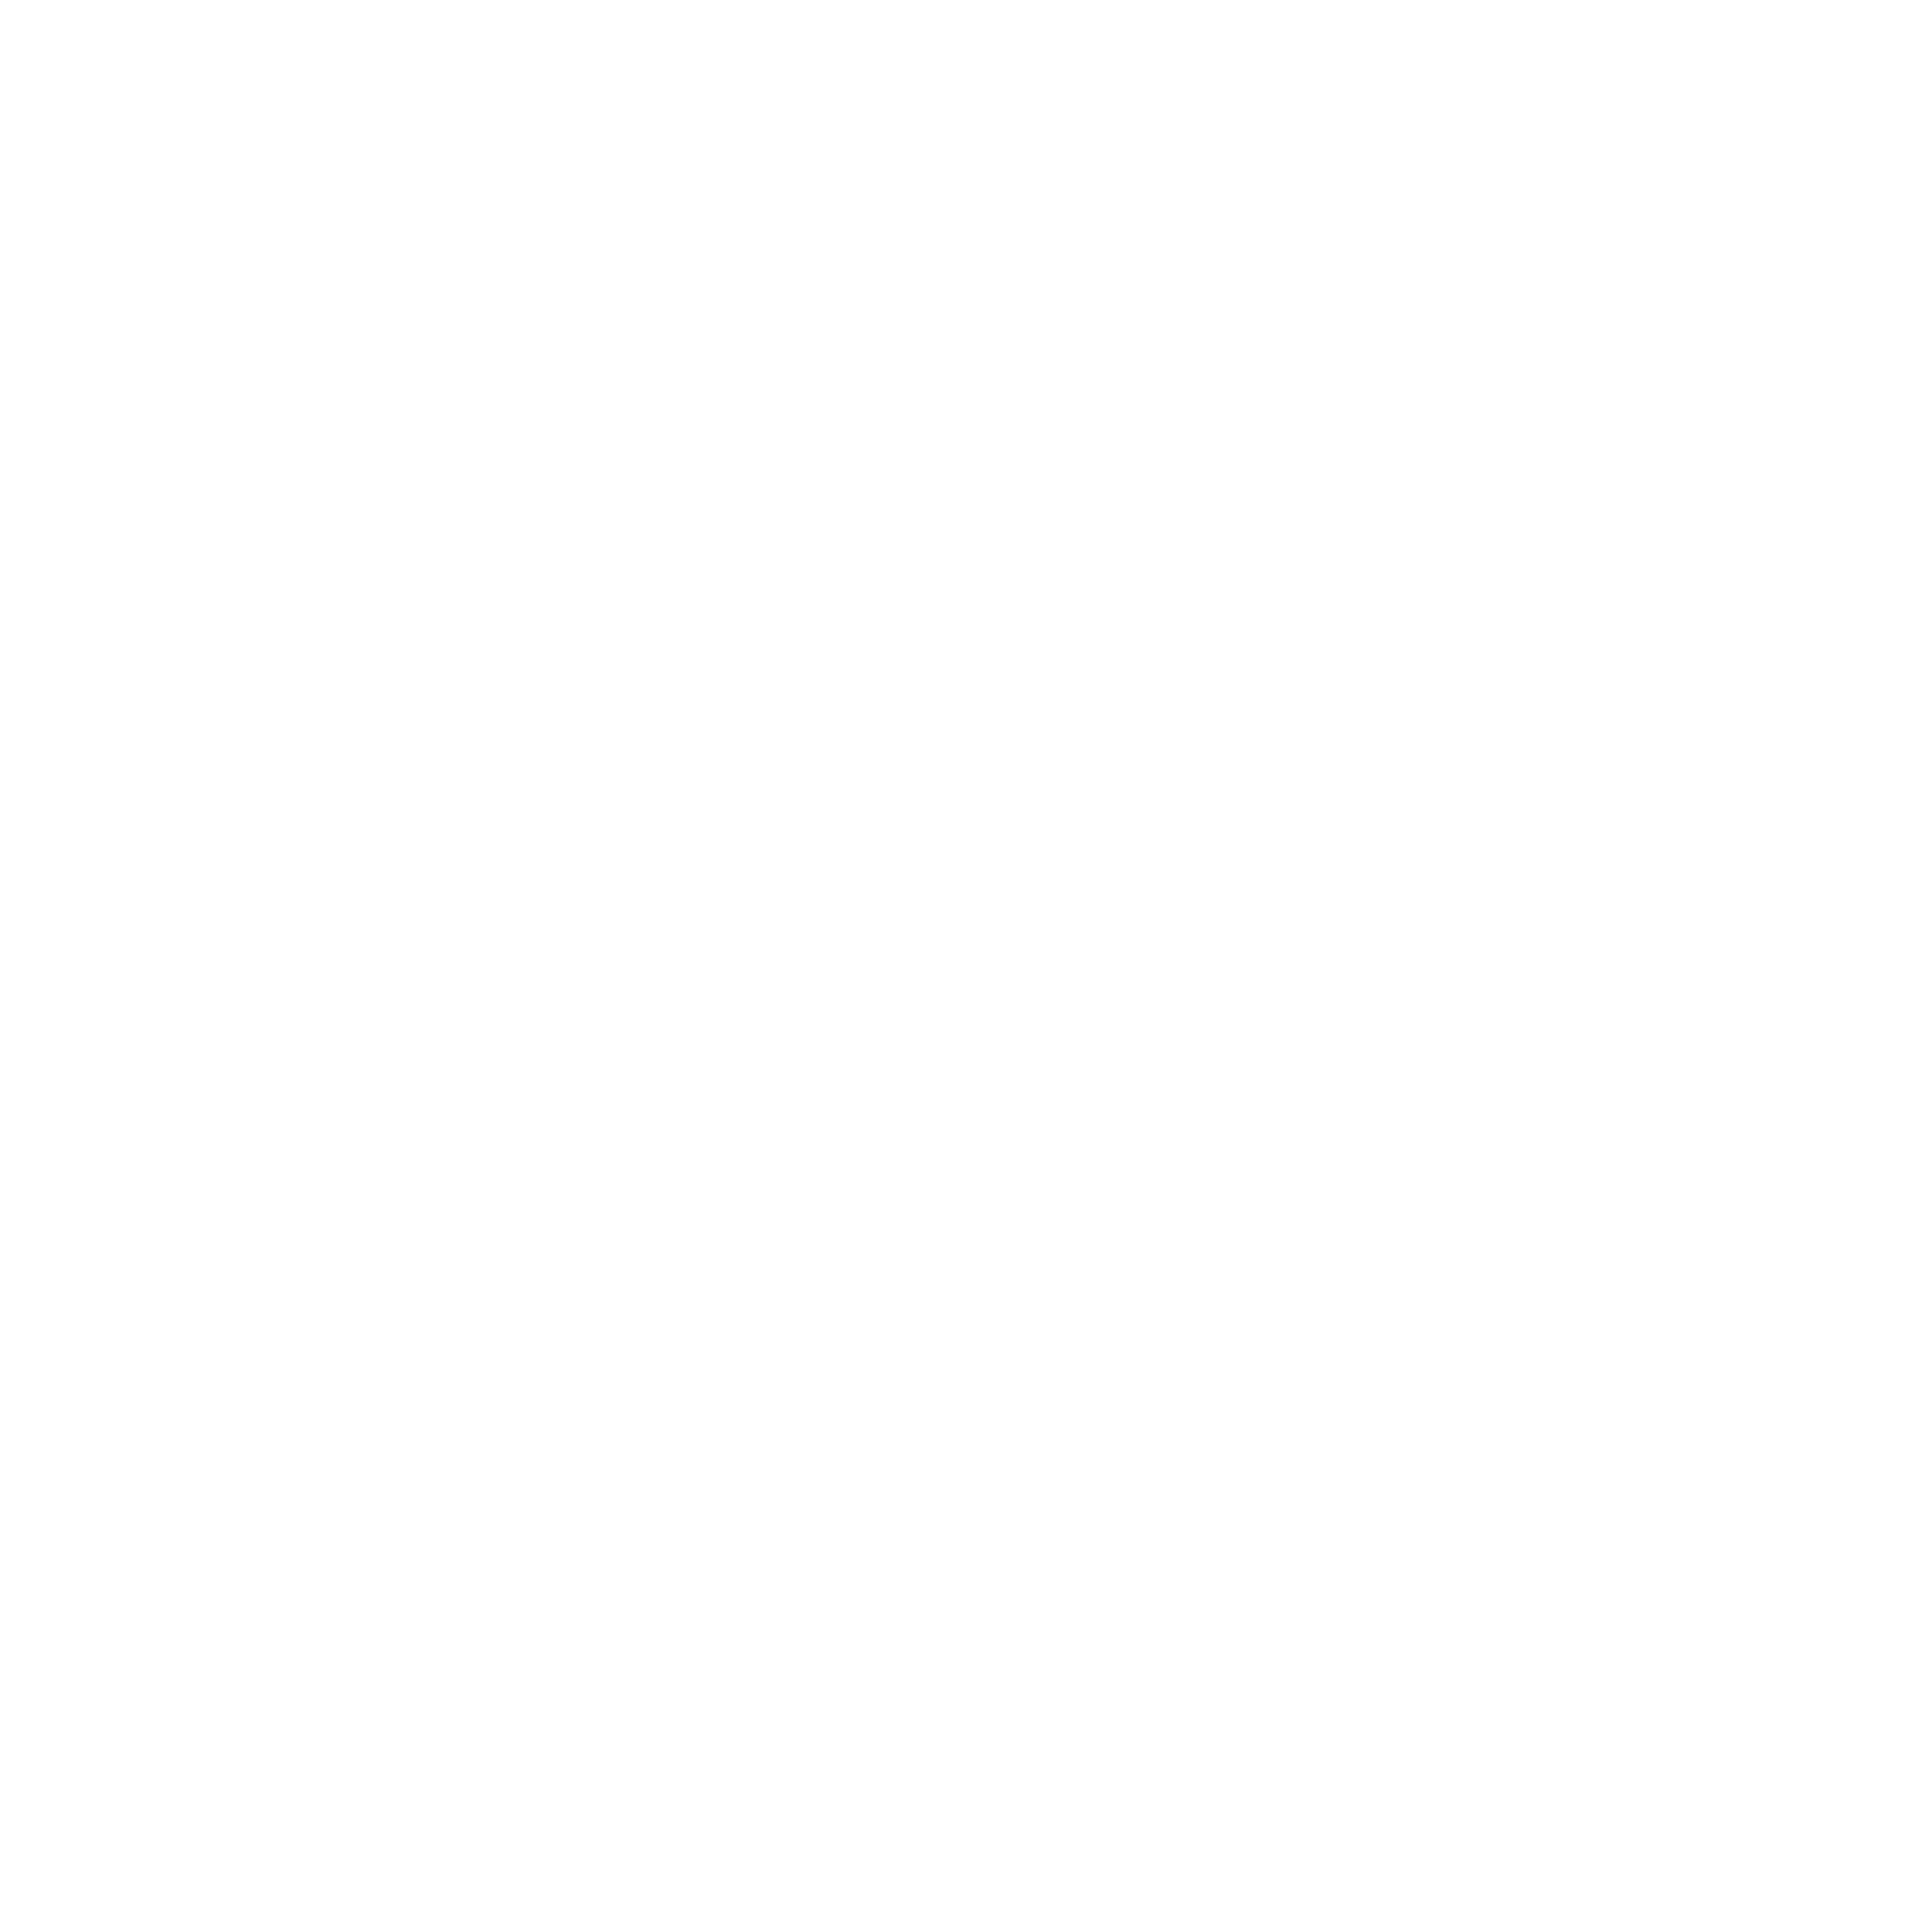 ISHMAEL